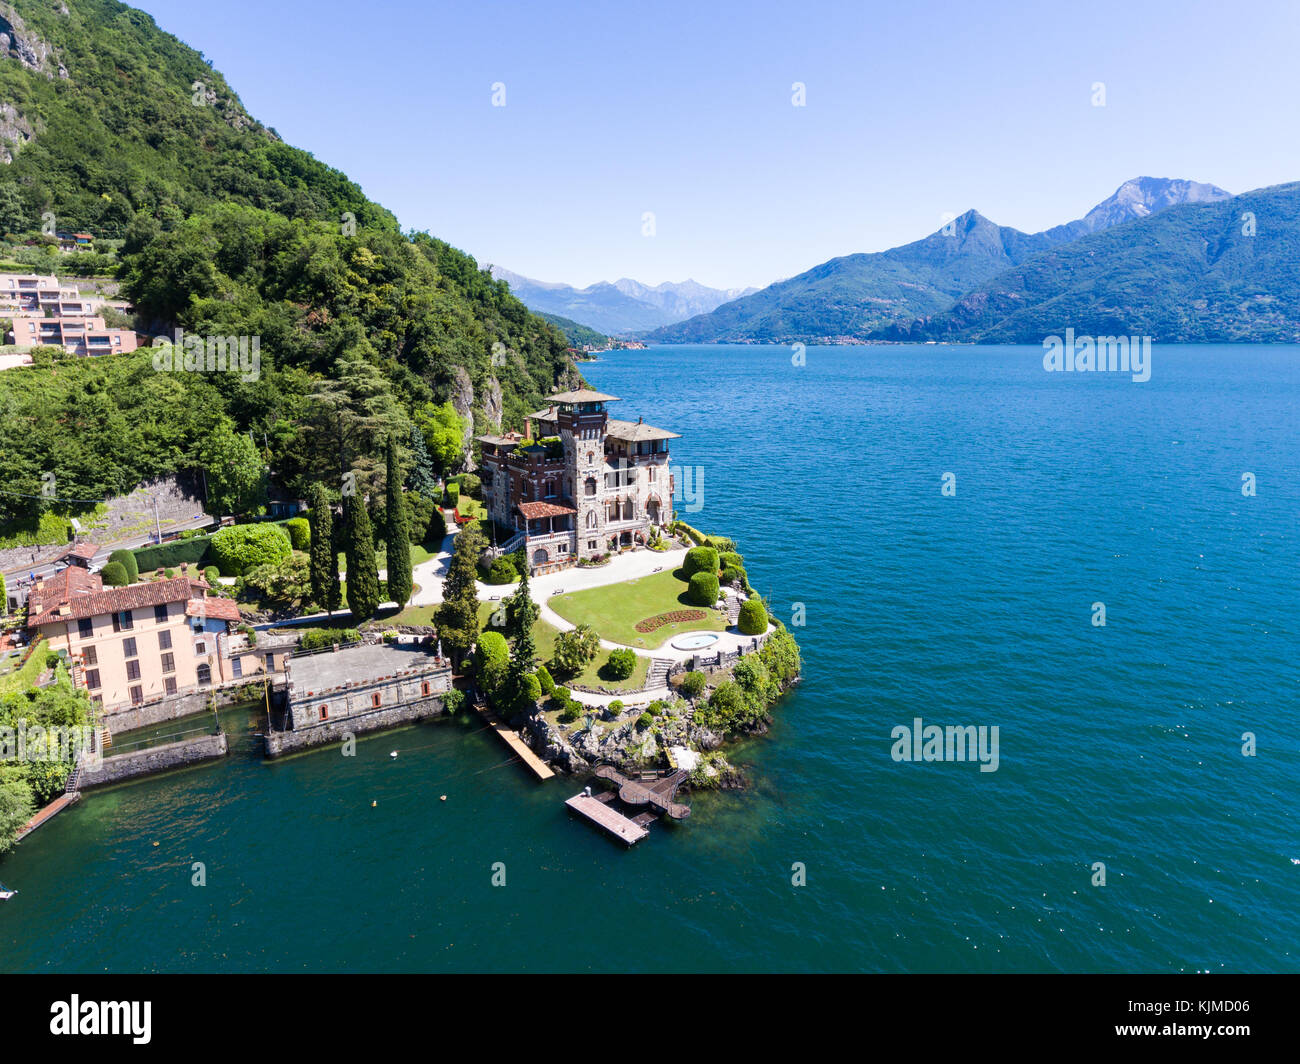 Villa Gaeta near Menaggio - Luxury propriety on Como lake in Italy Stock Photo